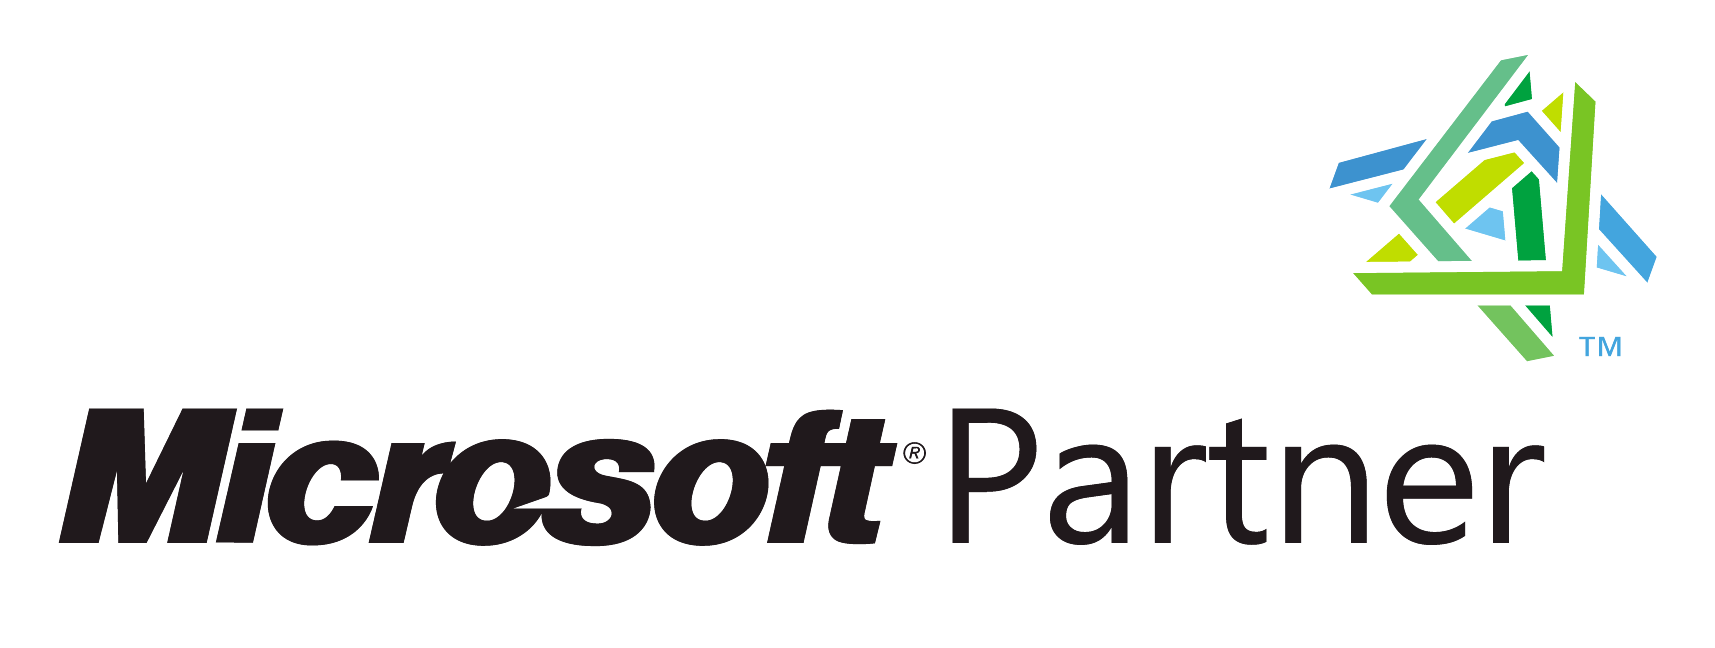 Microsoft Partner sedan 2000